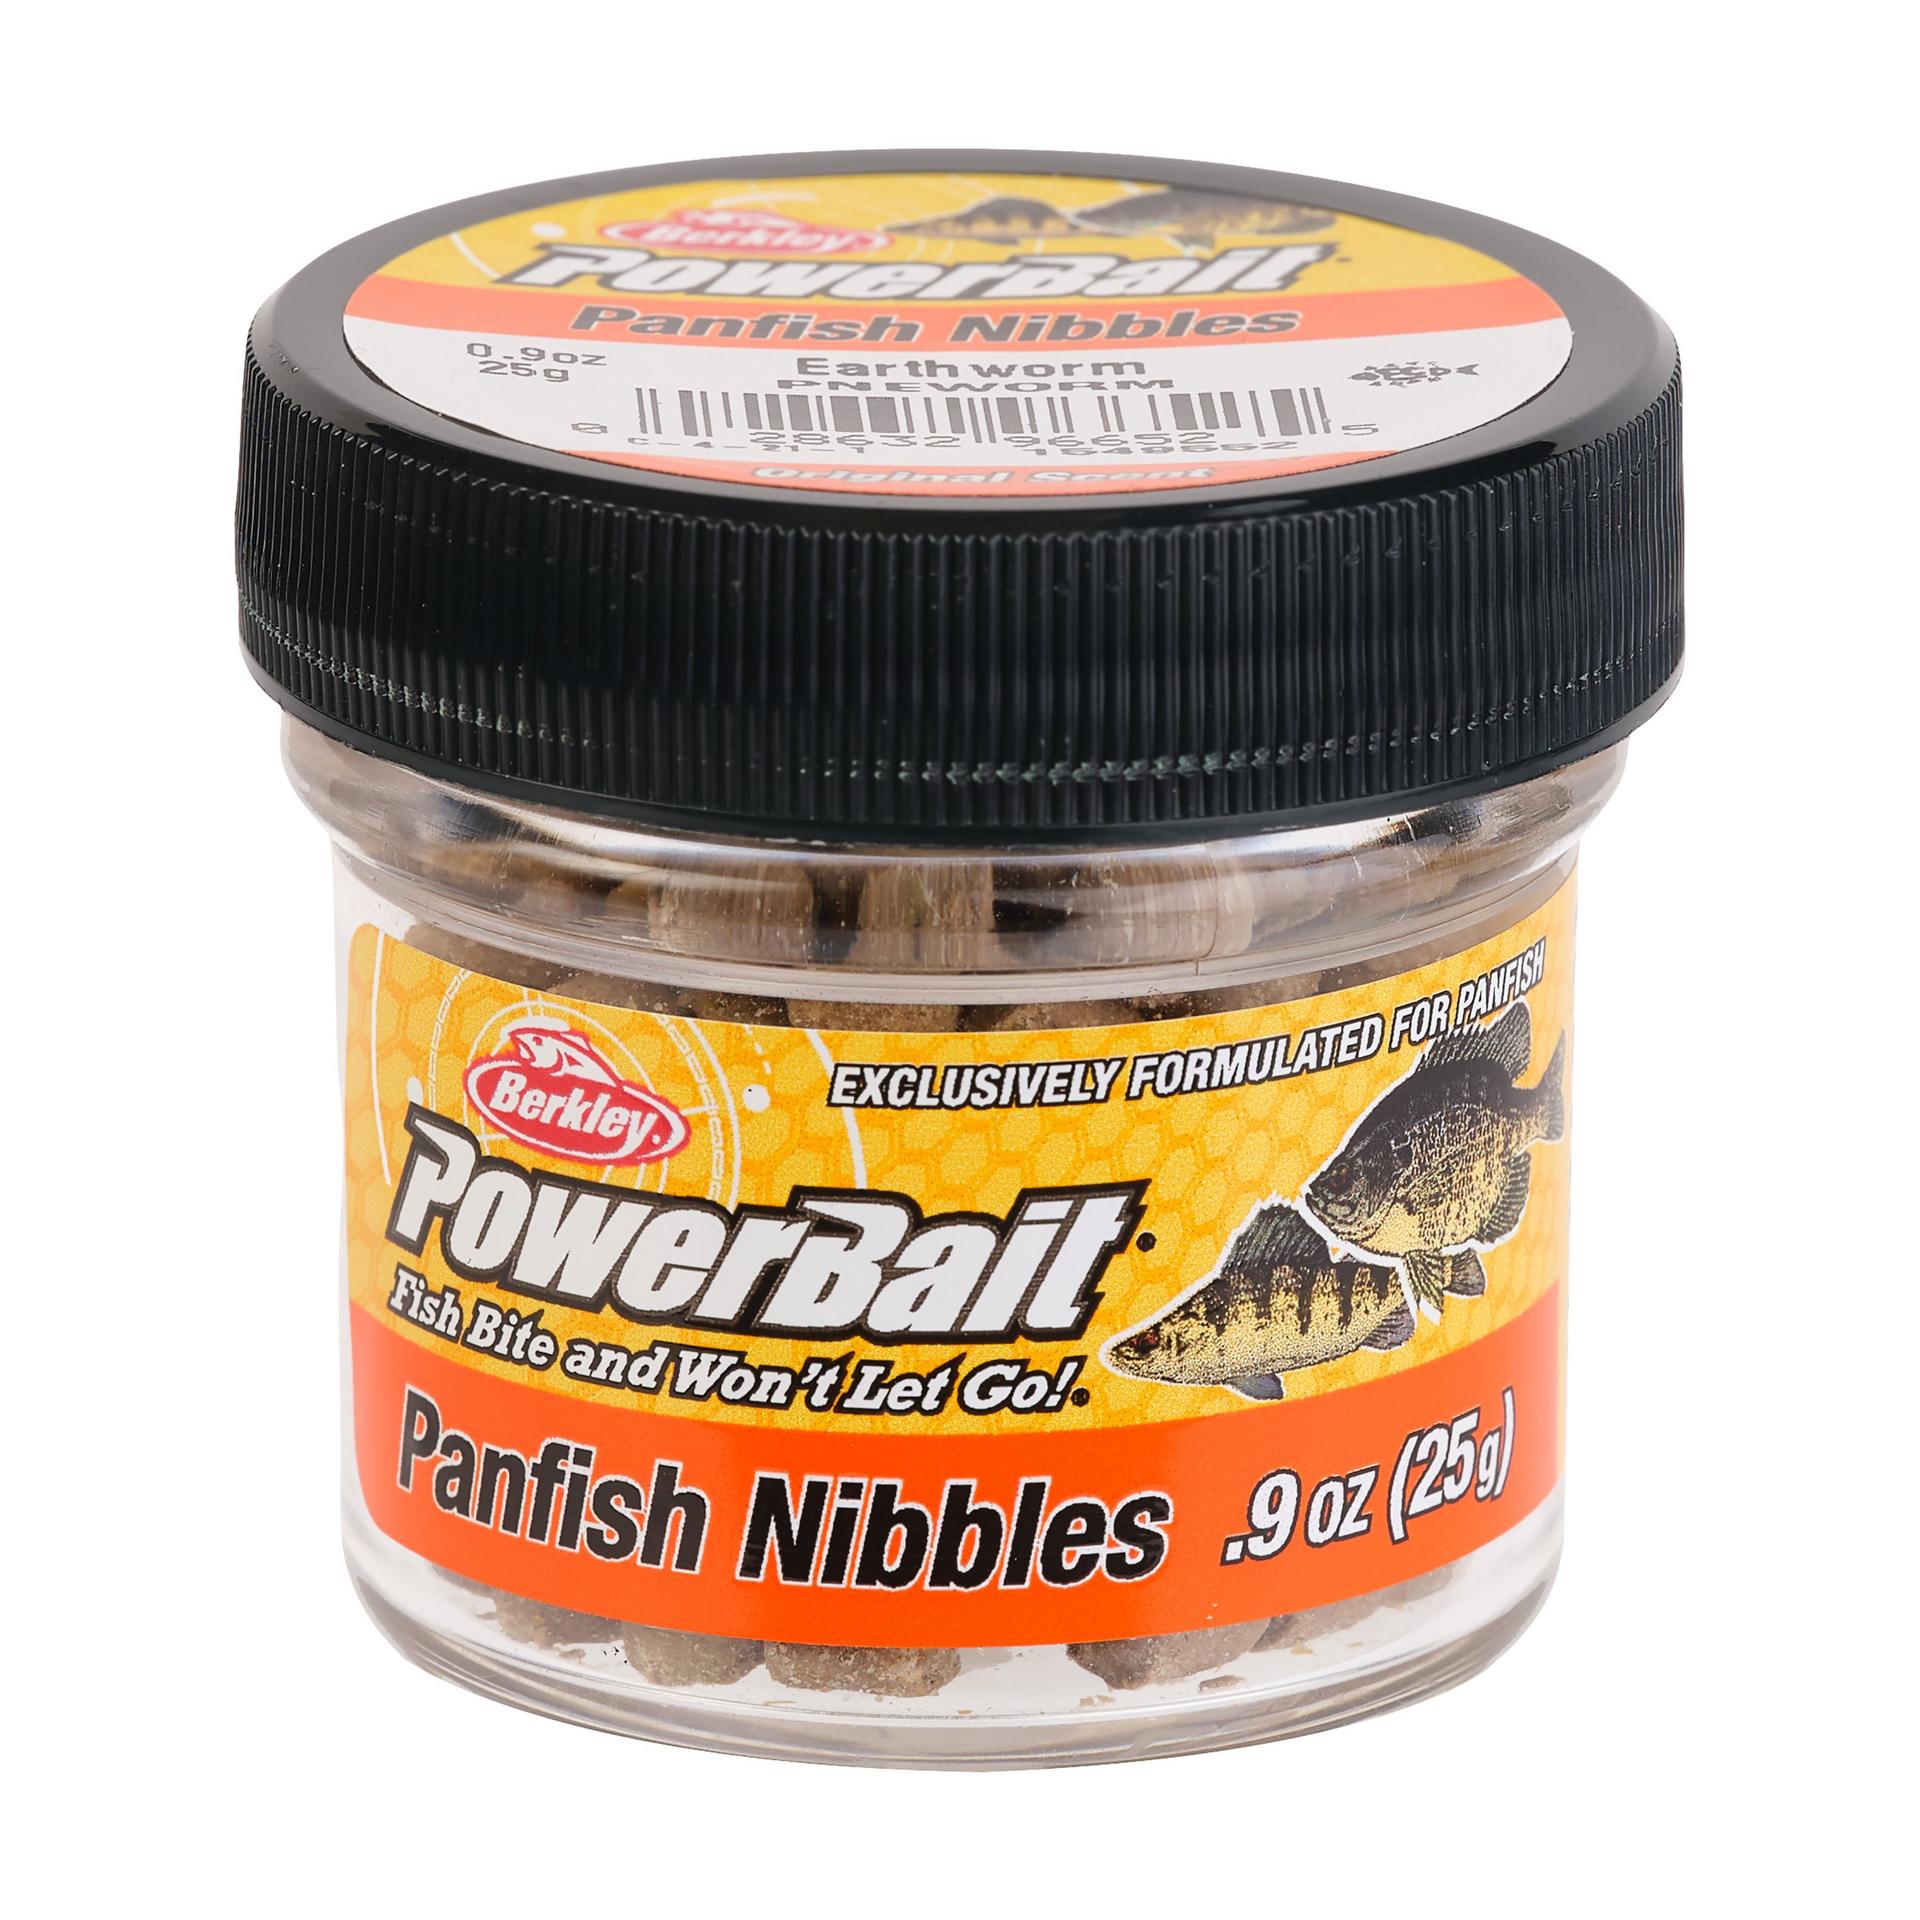 PowerBaitPanfishNibbles Earthworm PKG | Berkley Fishing